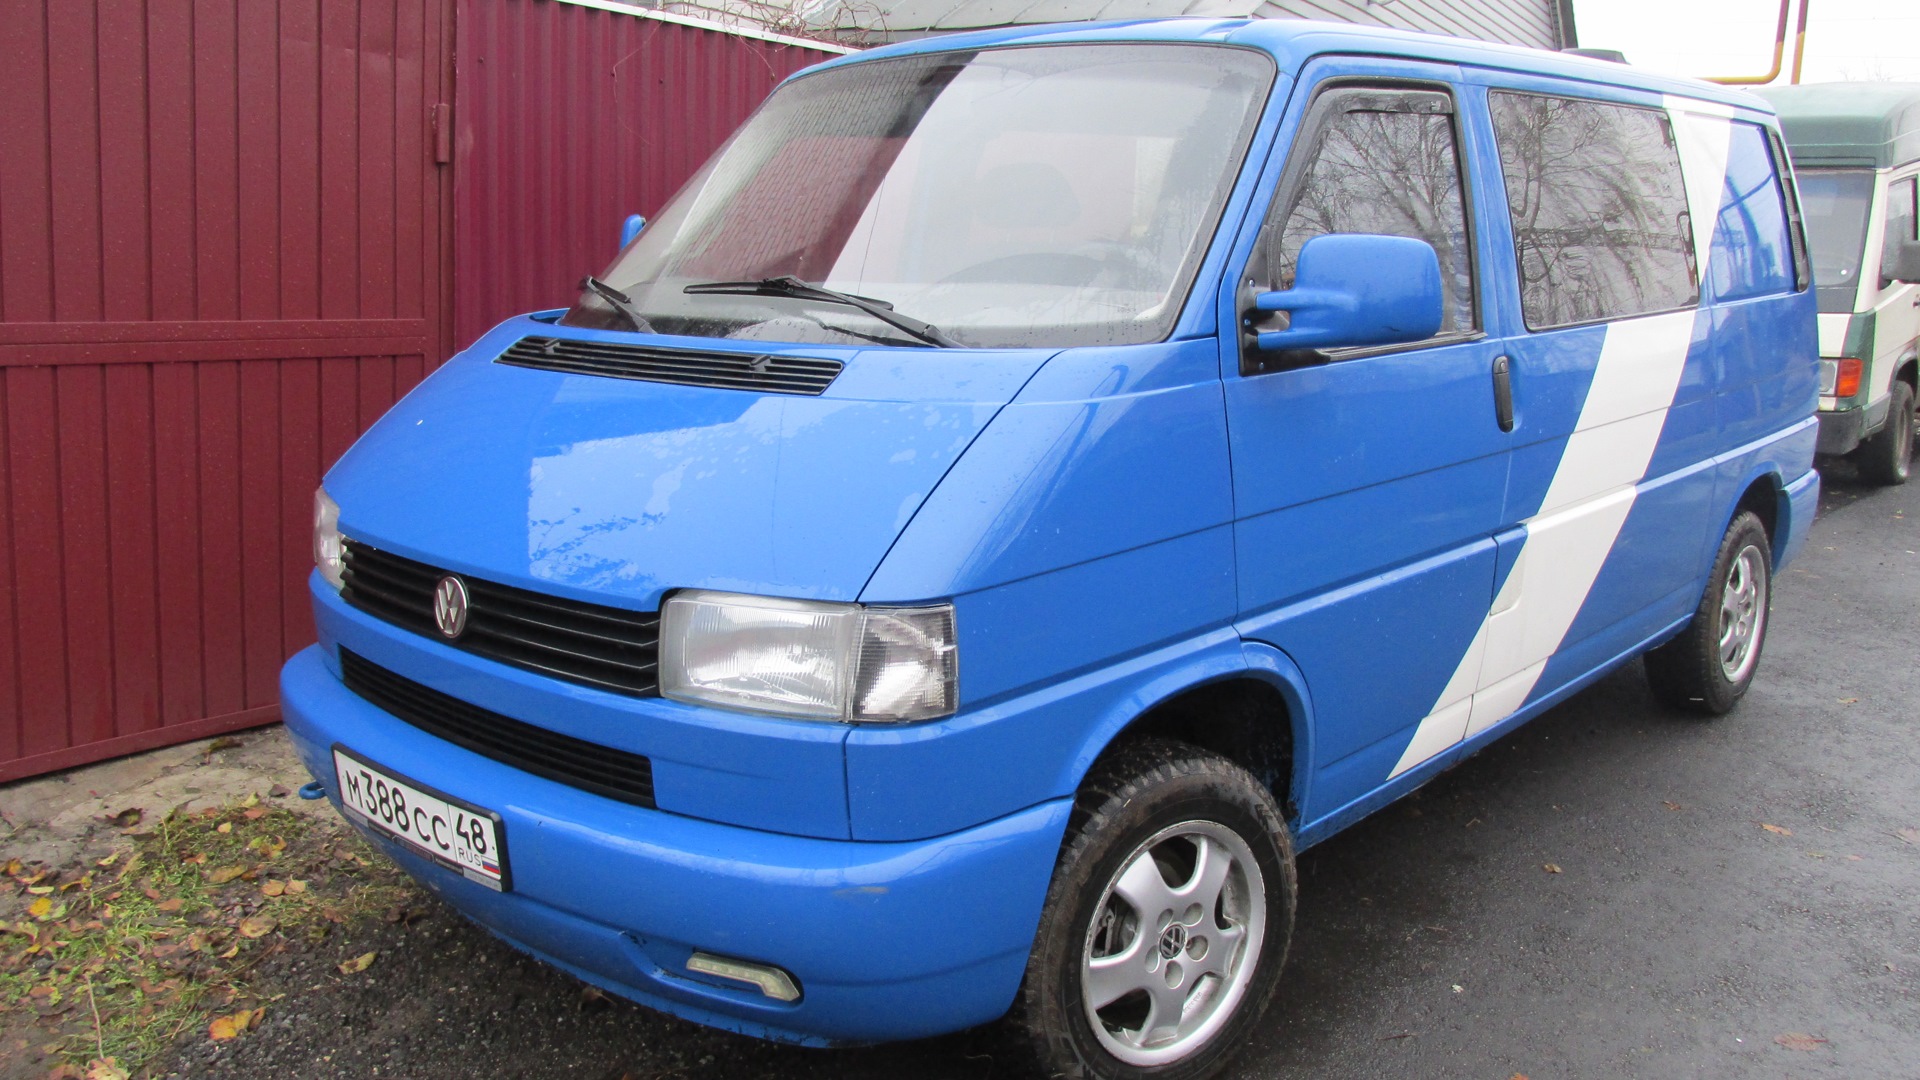 Т4 ajt. Фольксваген Транспортер 1996. Фольксваген Транспортер т4 голубой]. Фольксваген т4 синий. Volkswagen t4 2000.